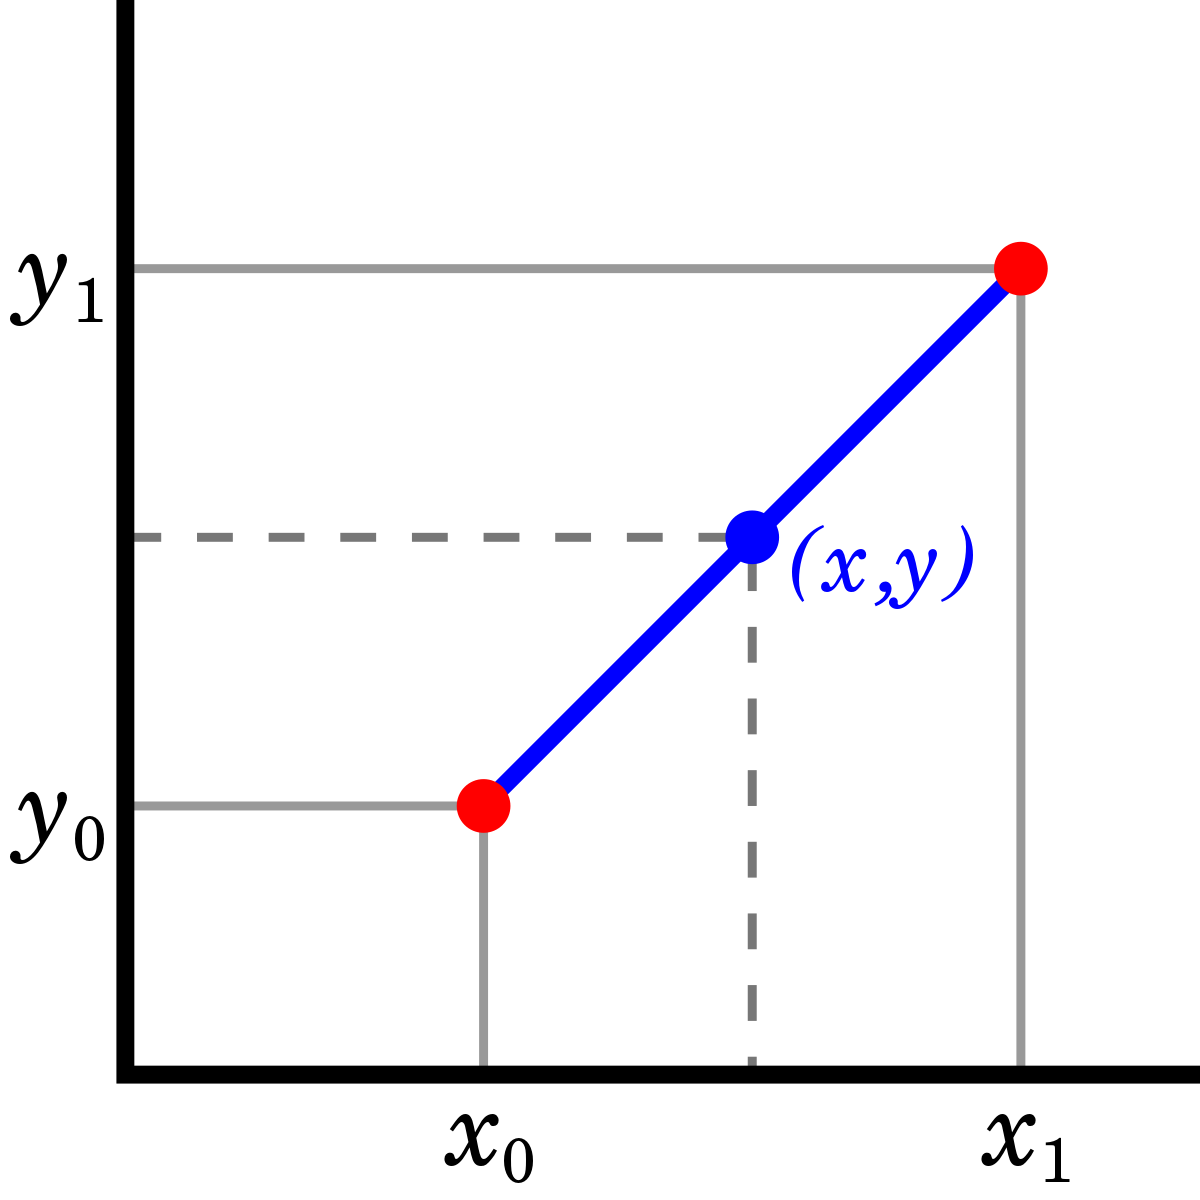 Linear program polynomial interpolation method